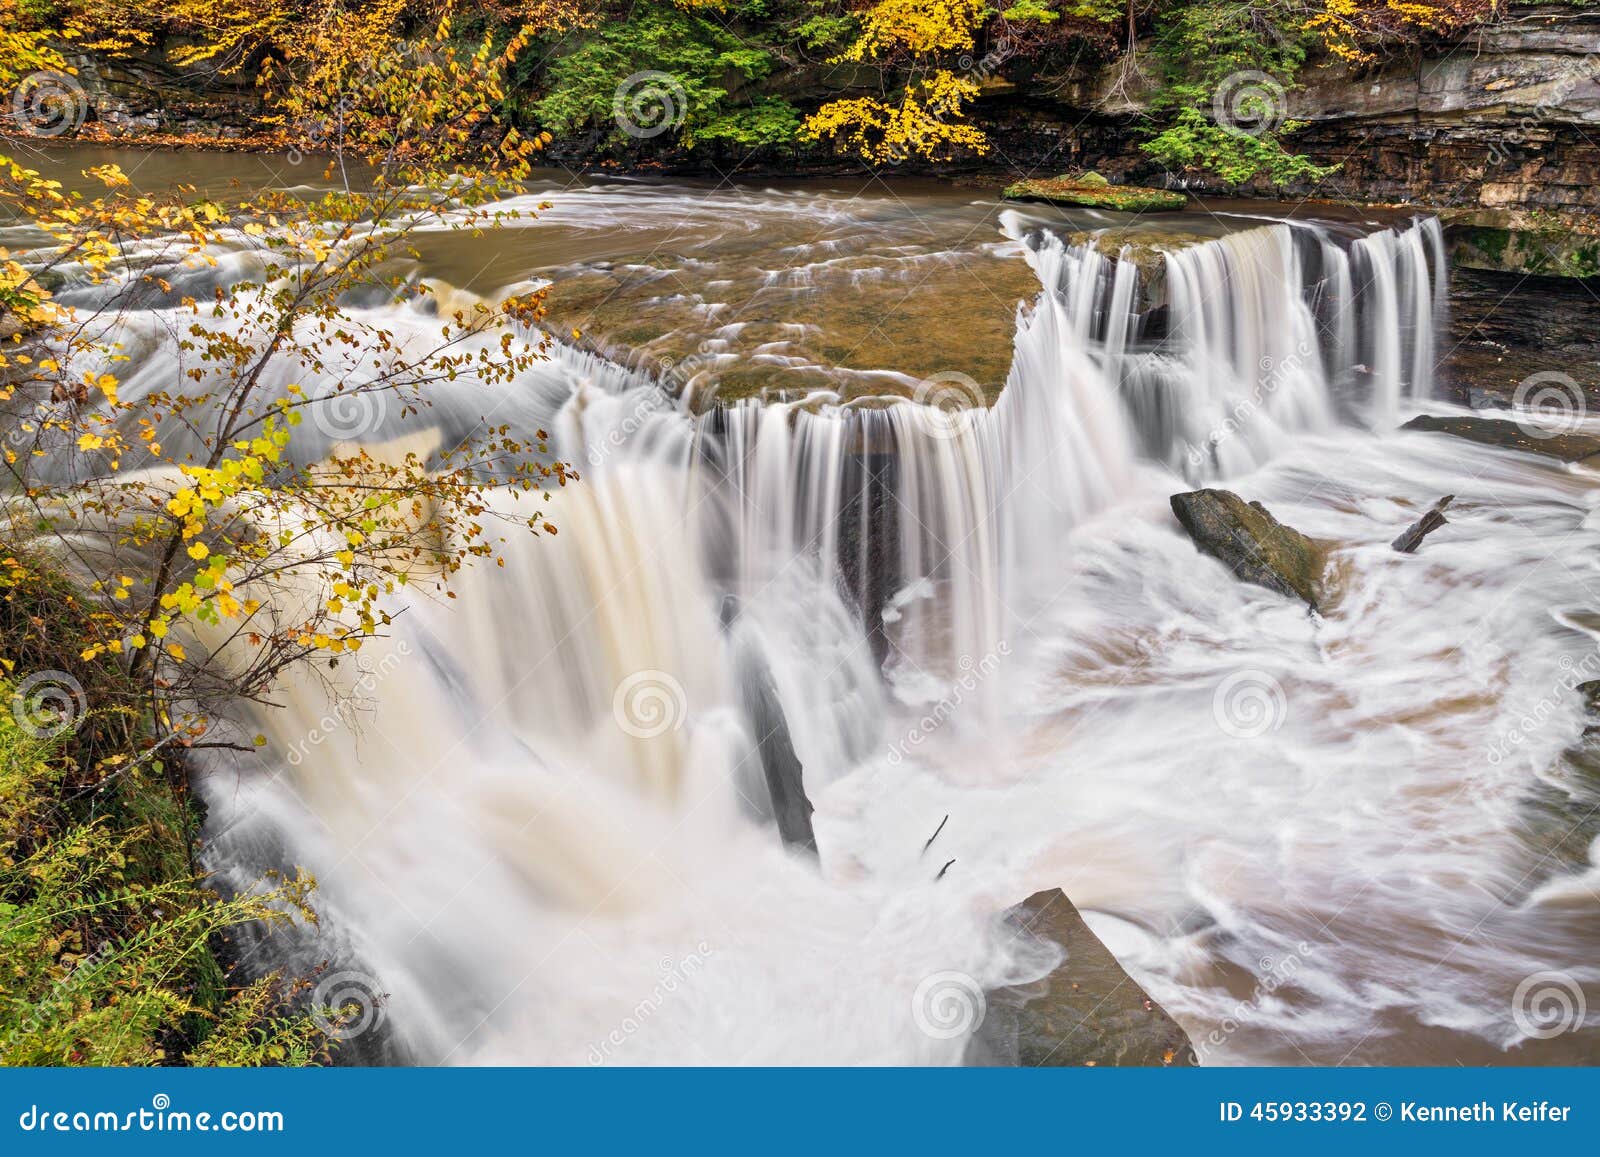 Waterfall on Tinkers Creek stock photo Image of autumn 